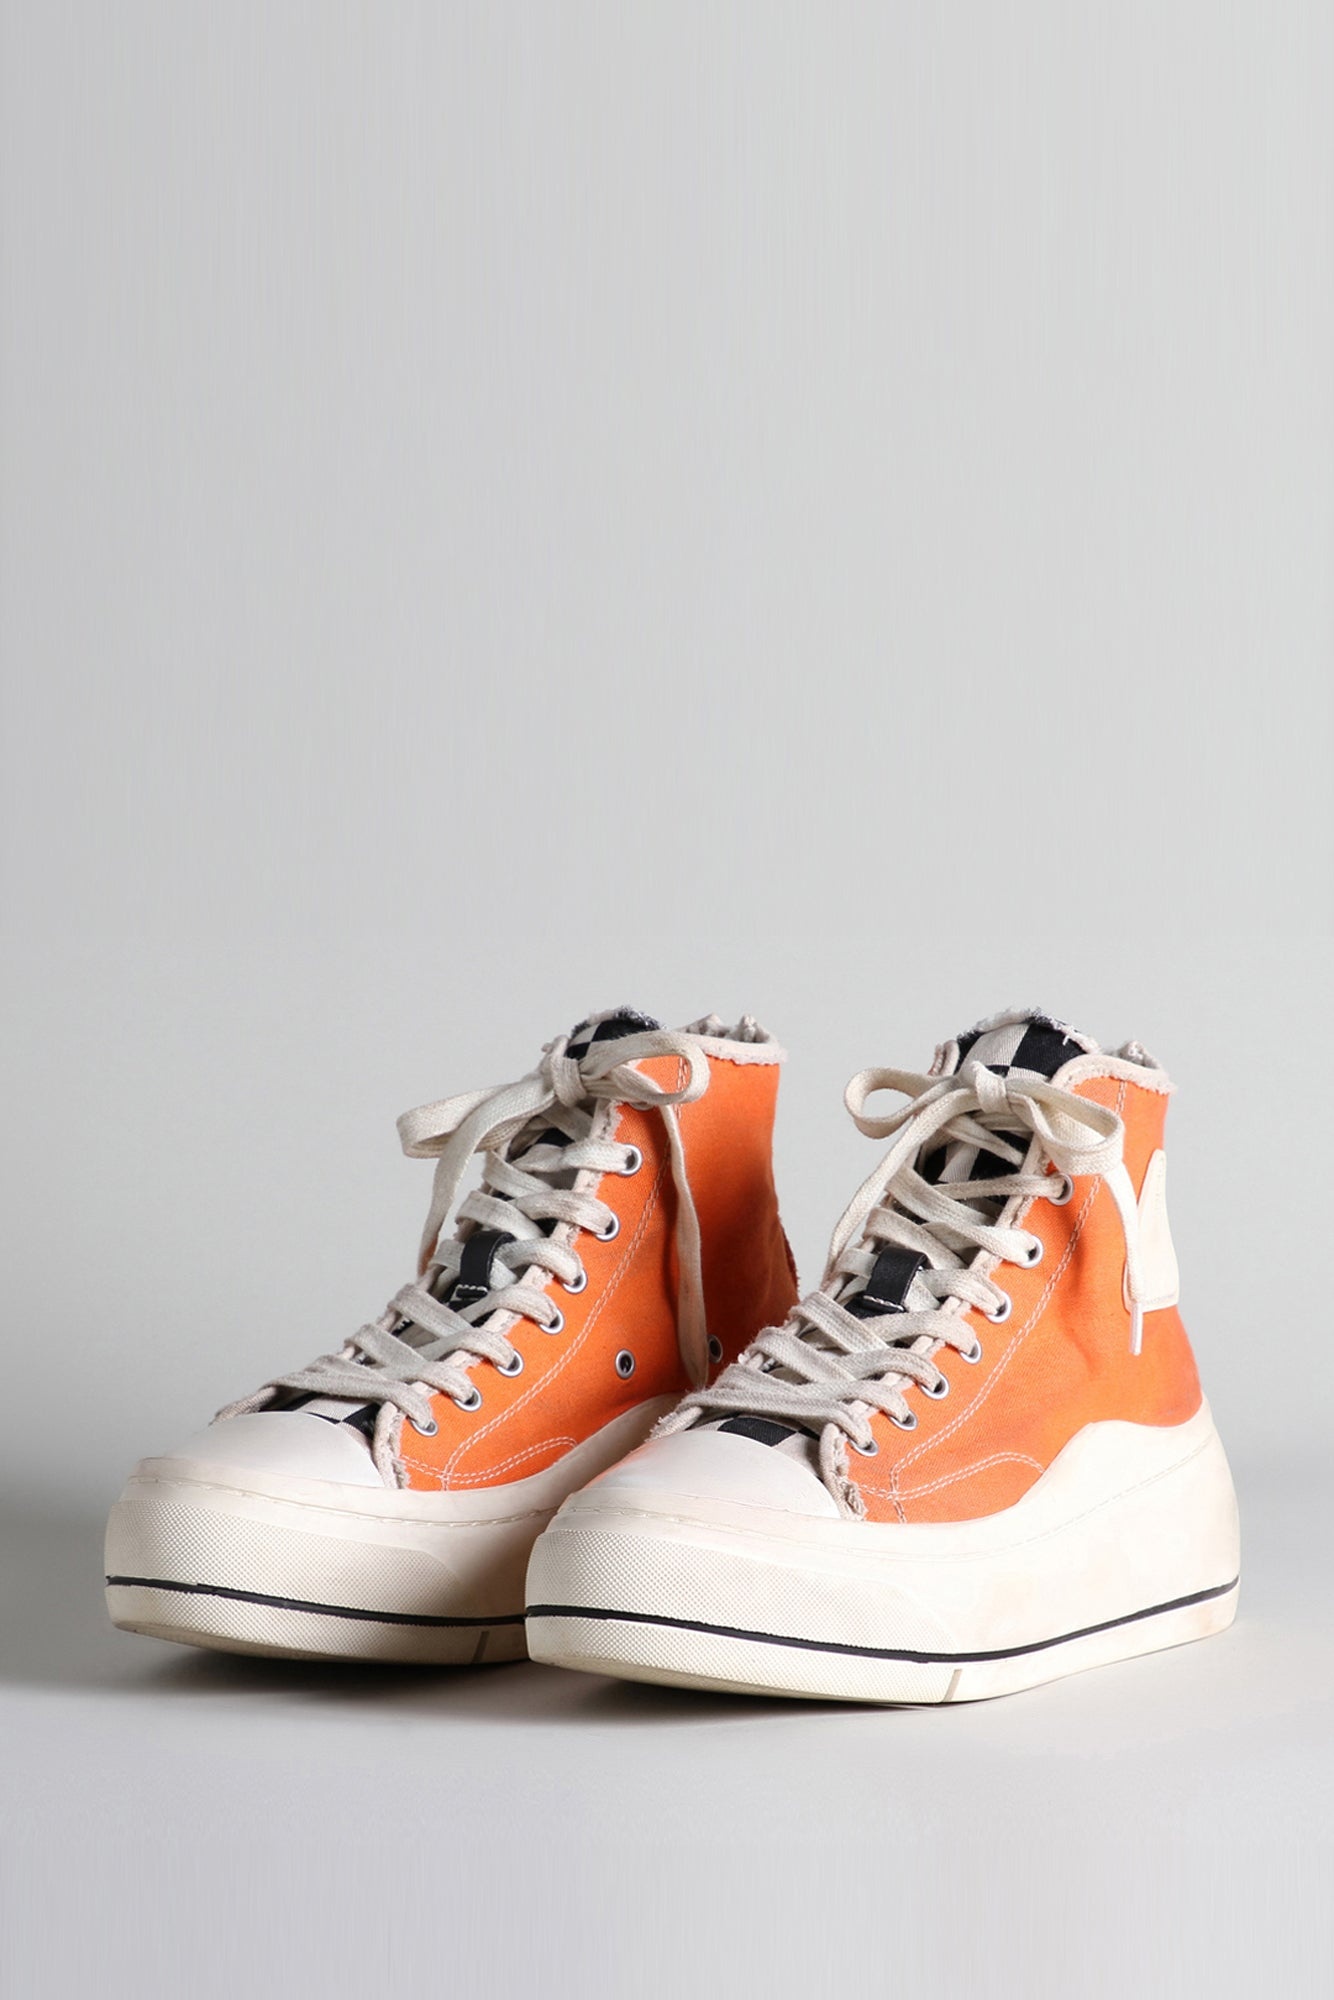 Kurt High Top Sneaker - Orange and Checker | R13 Denim Official Site - 1